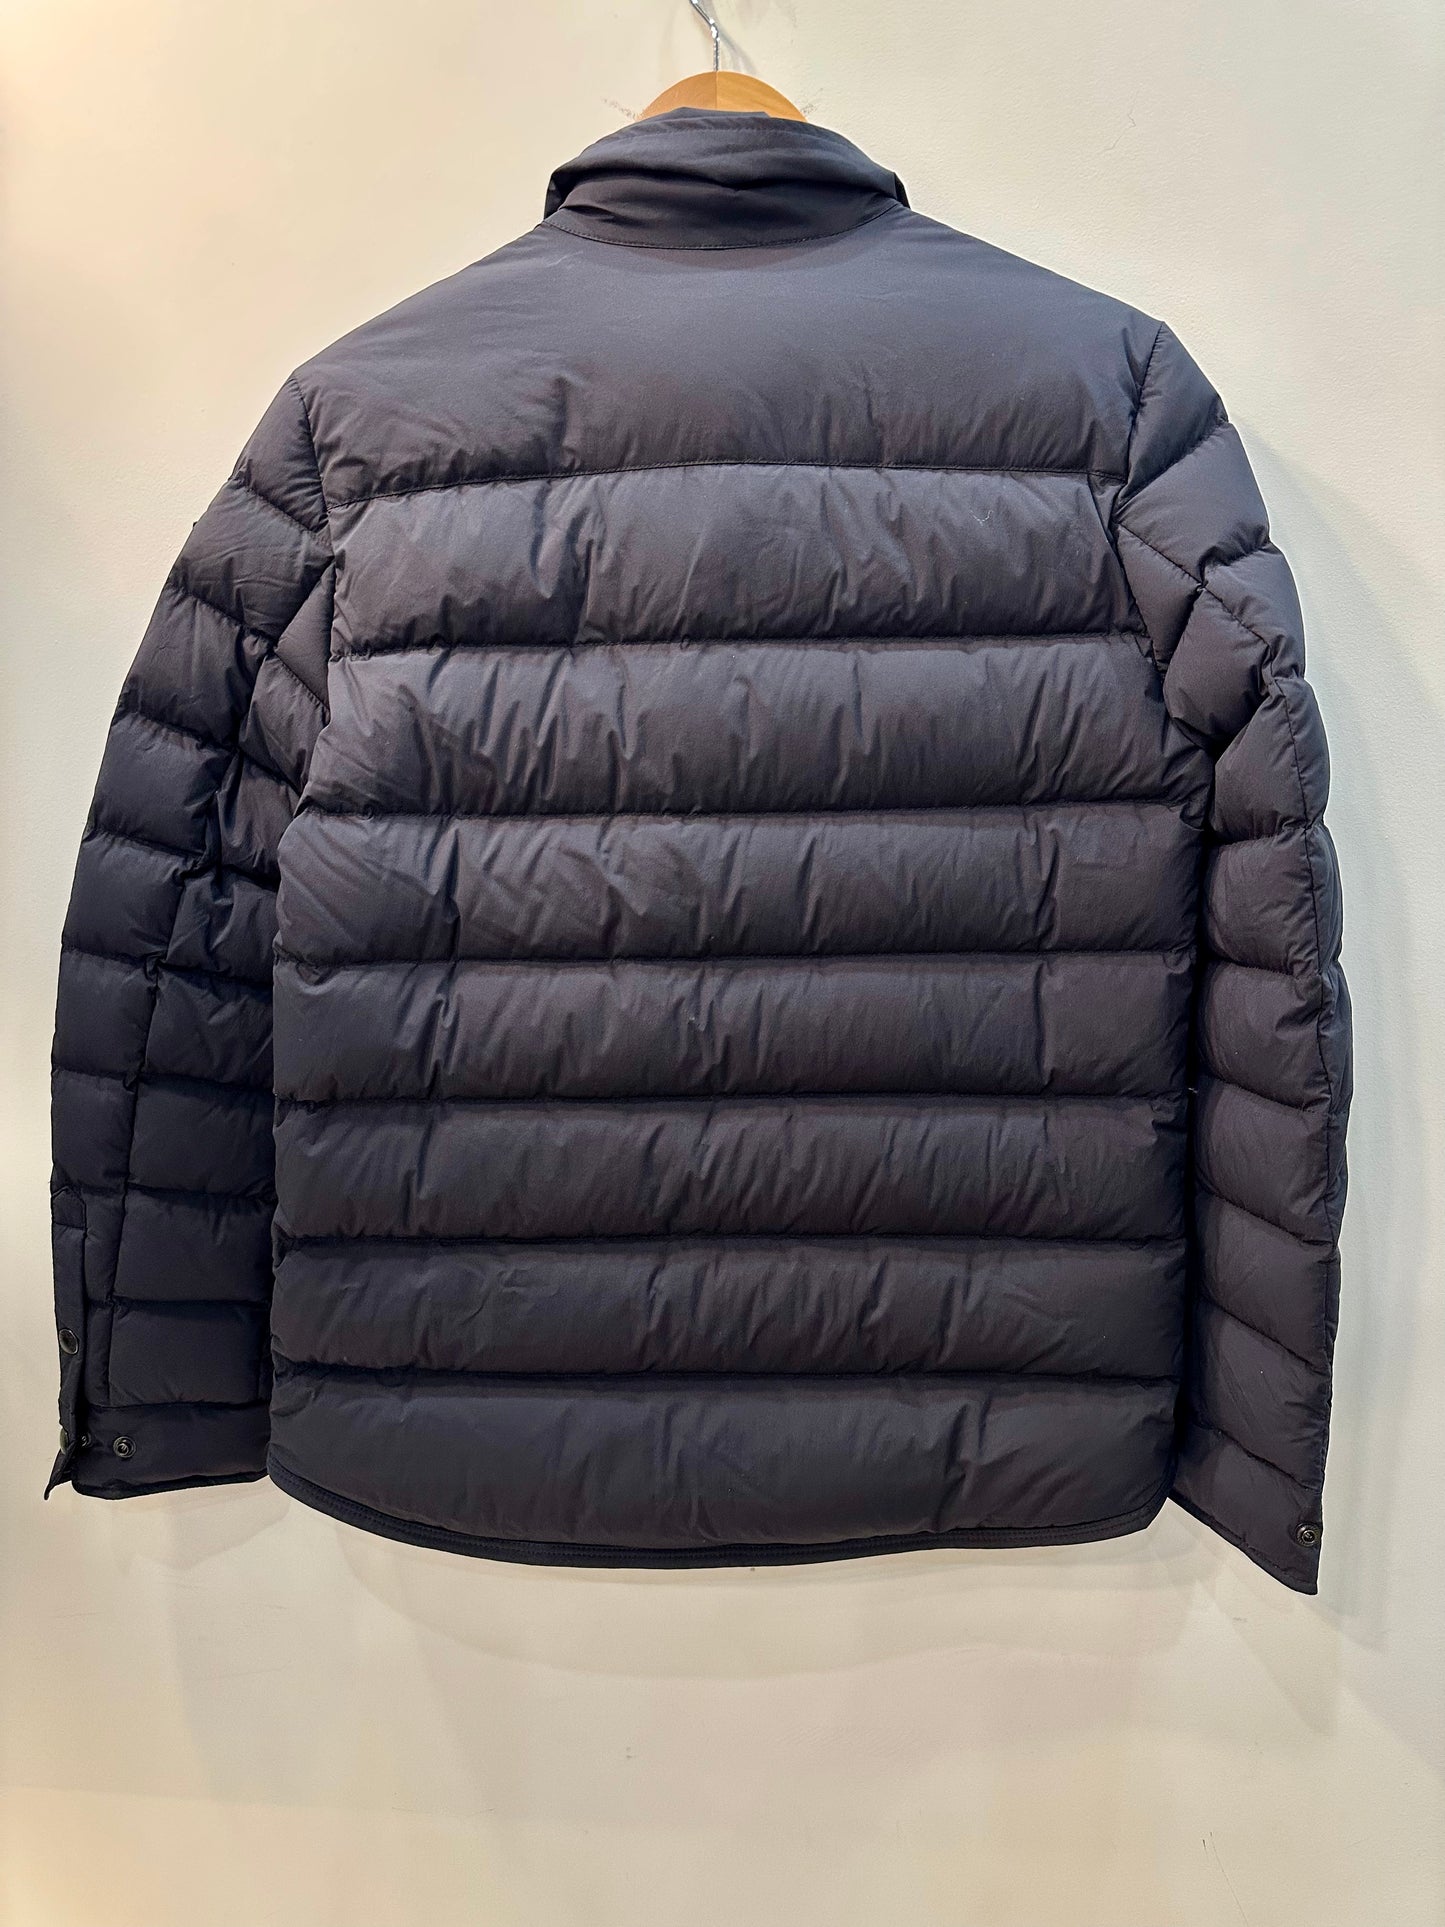 Moncler Men’s Gaudenier Giubbotto Jacket size1 New